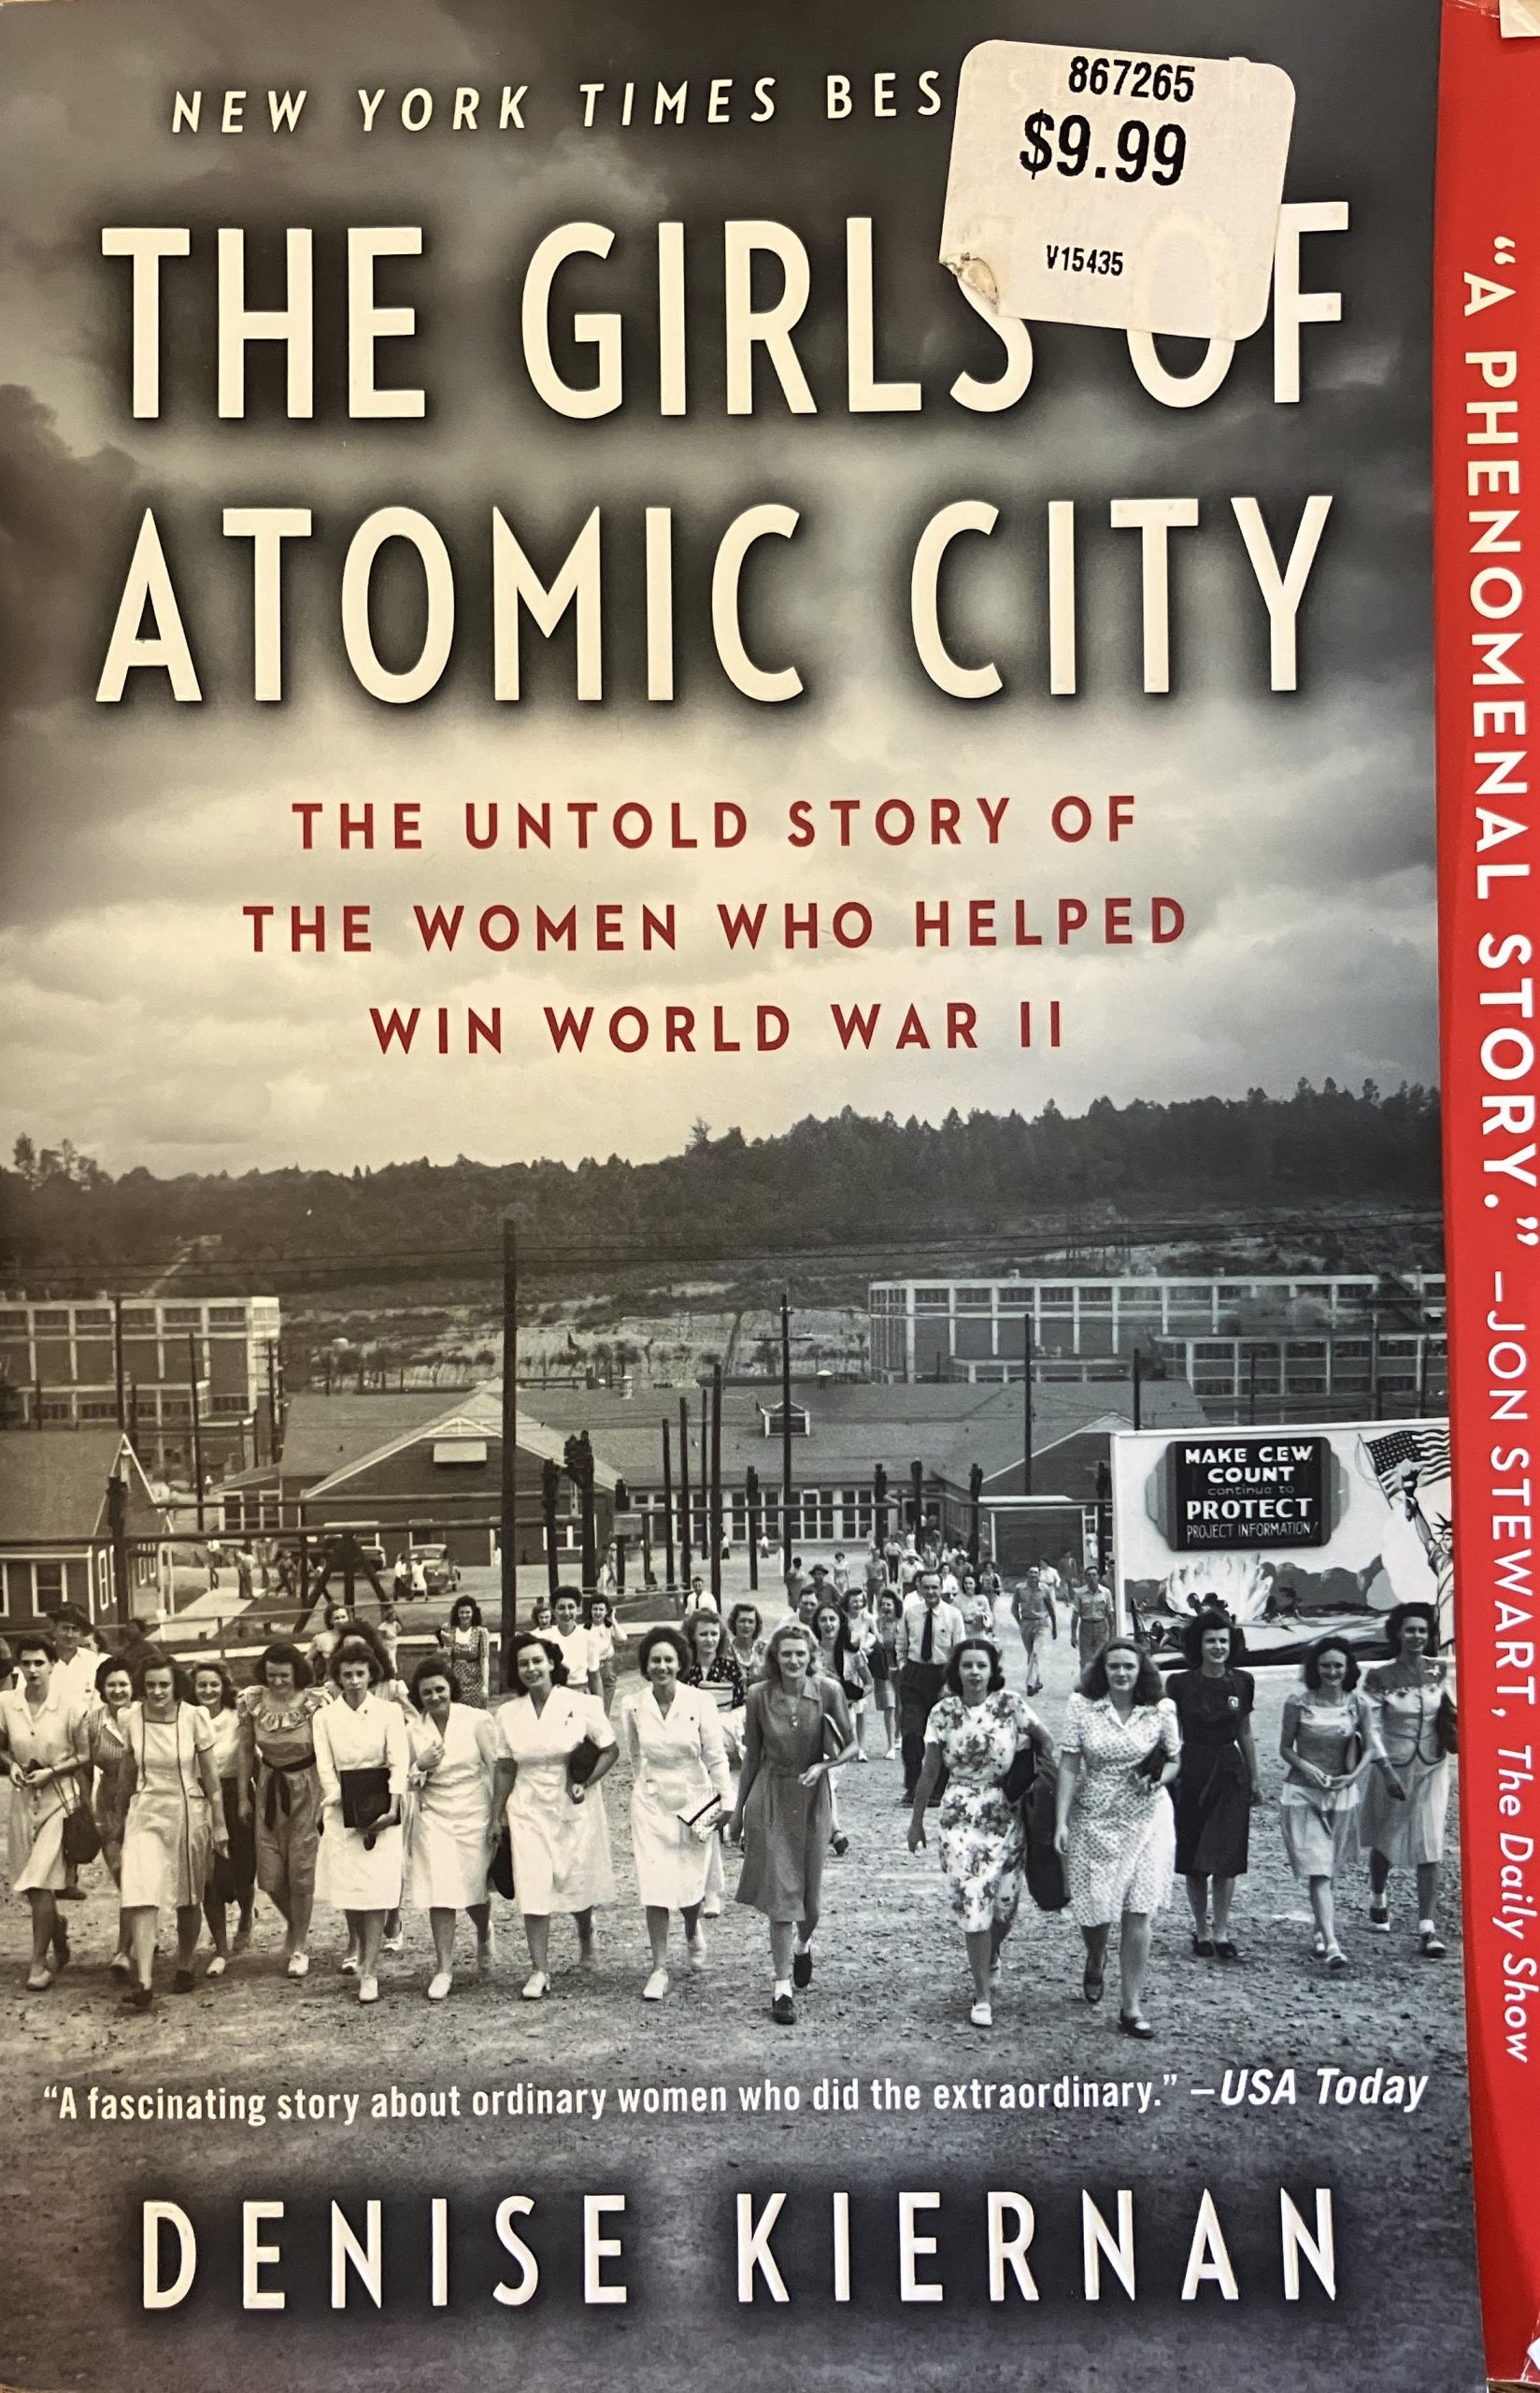 Rhea: “The Girls of Atomic City” by Denise Kiernan (Biography)